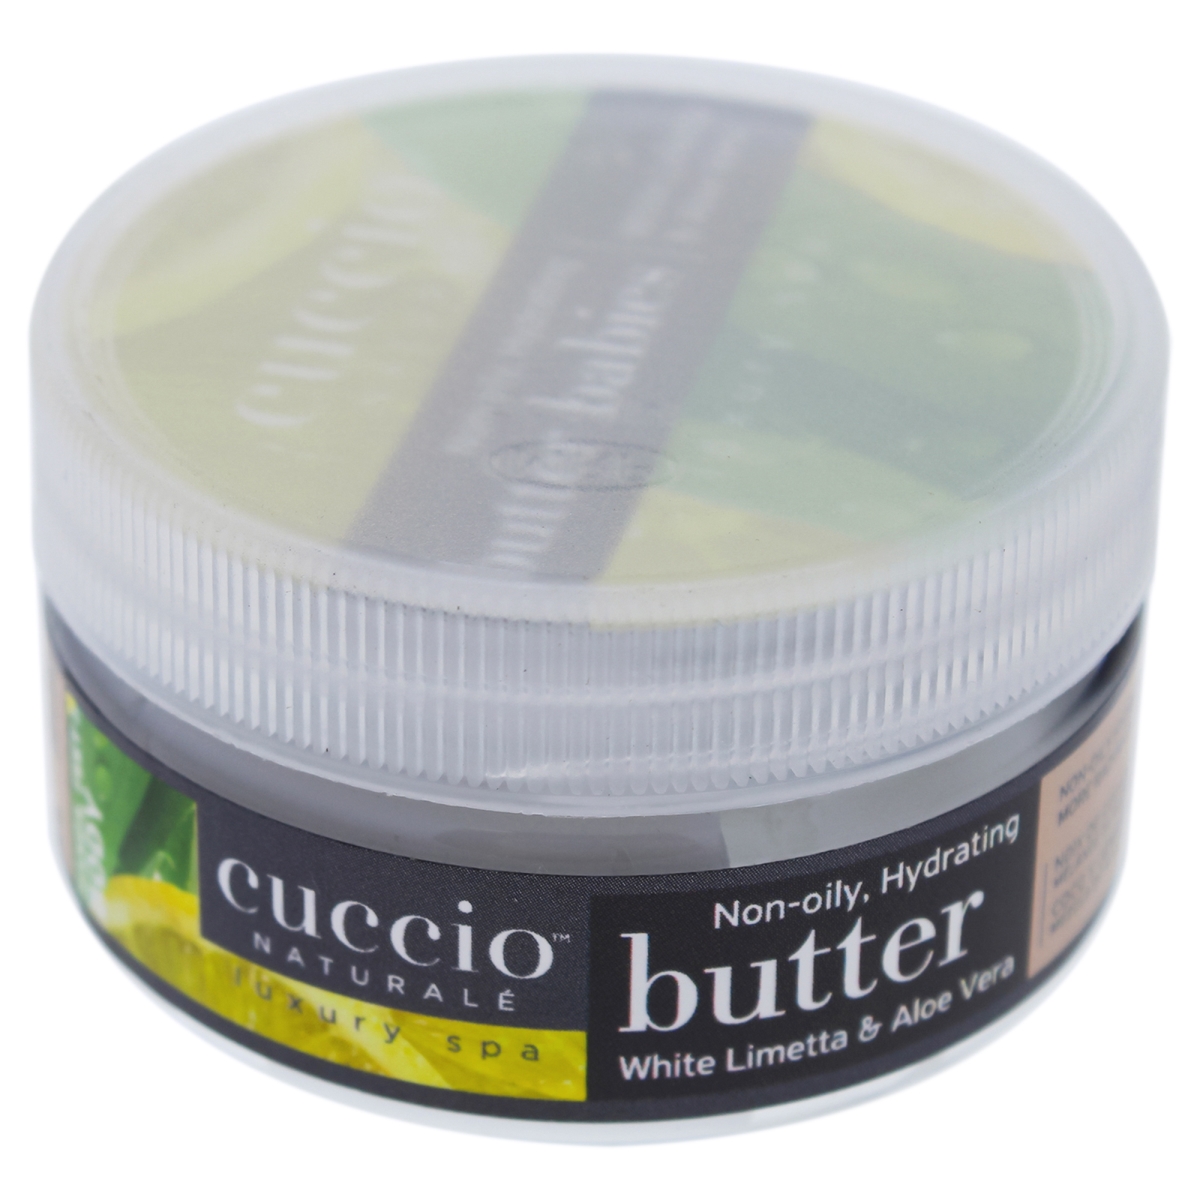 I0090877 Butter Babies Body Lotion For Unisex - White Limetta & Aloe Vera - 1.5 Oz